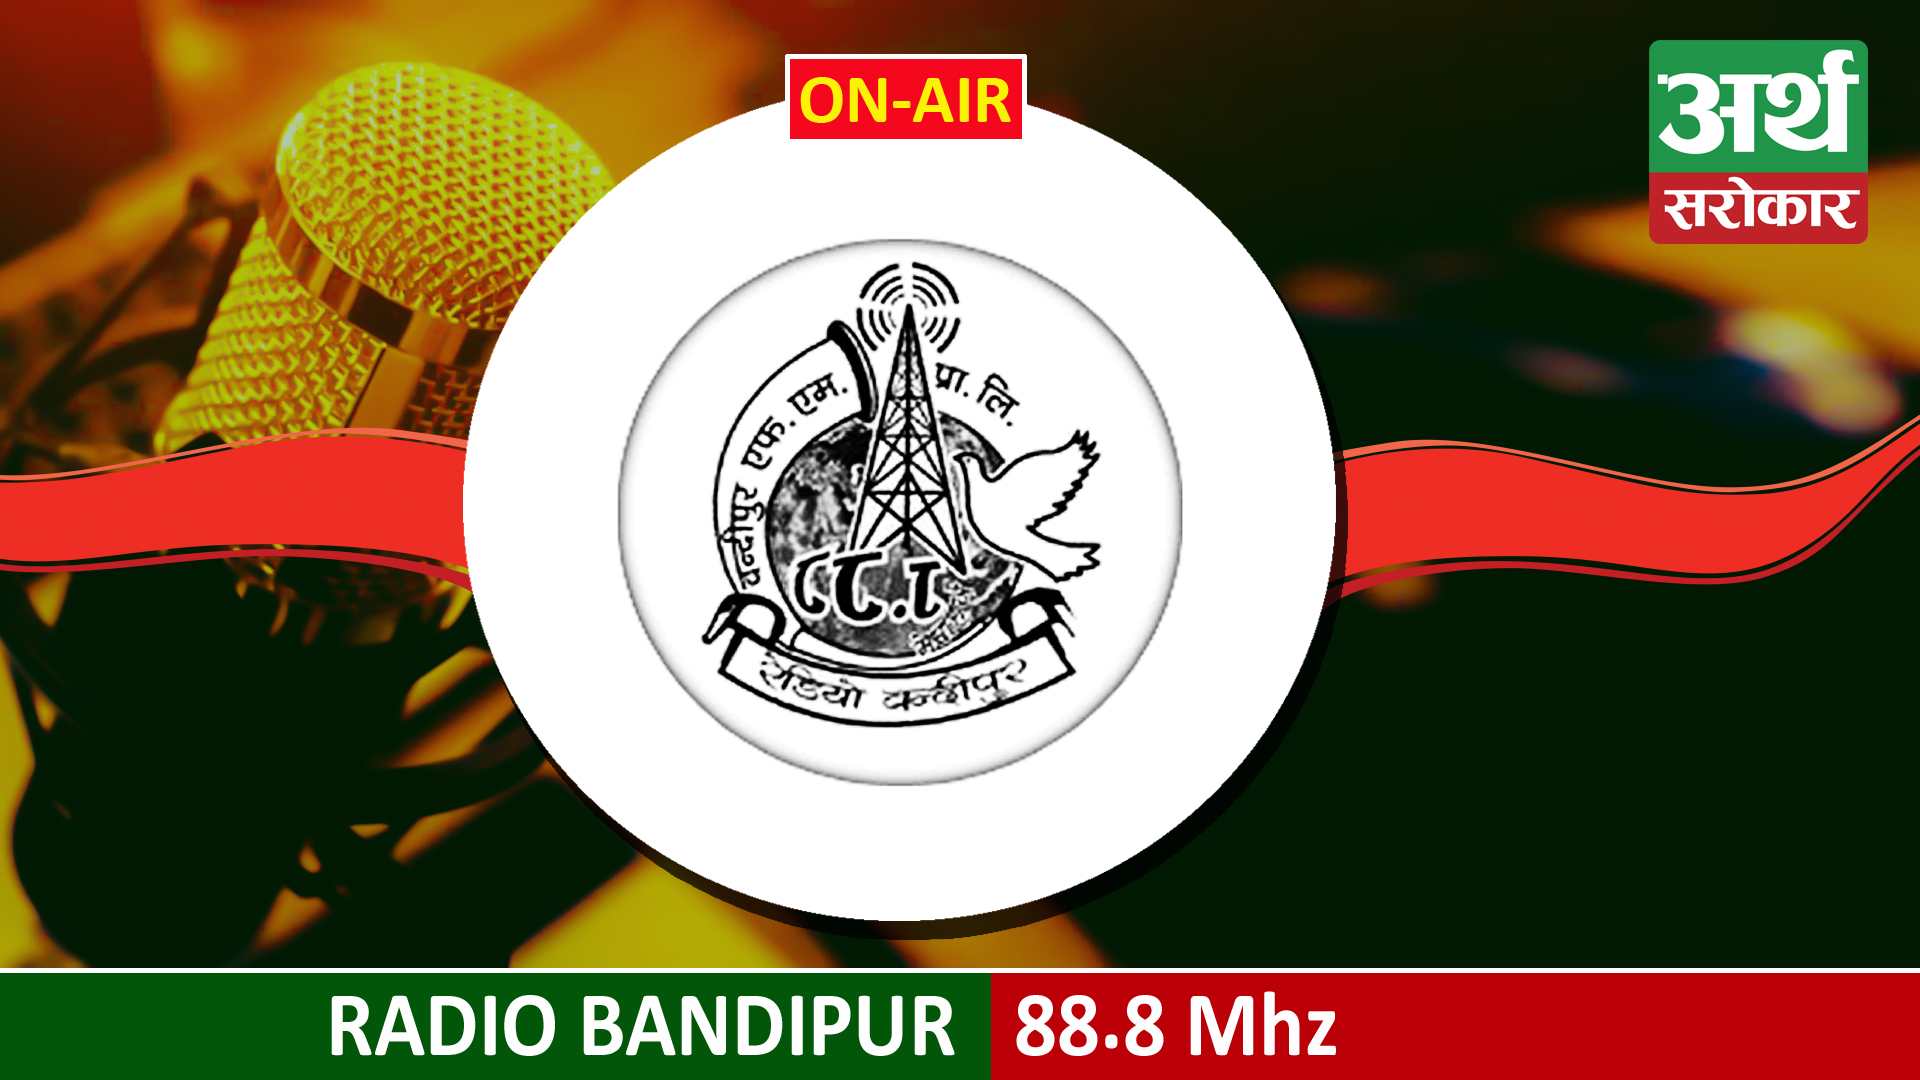 Bandipur FM 88.8 Mhz